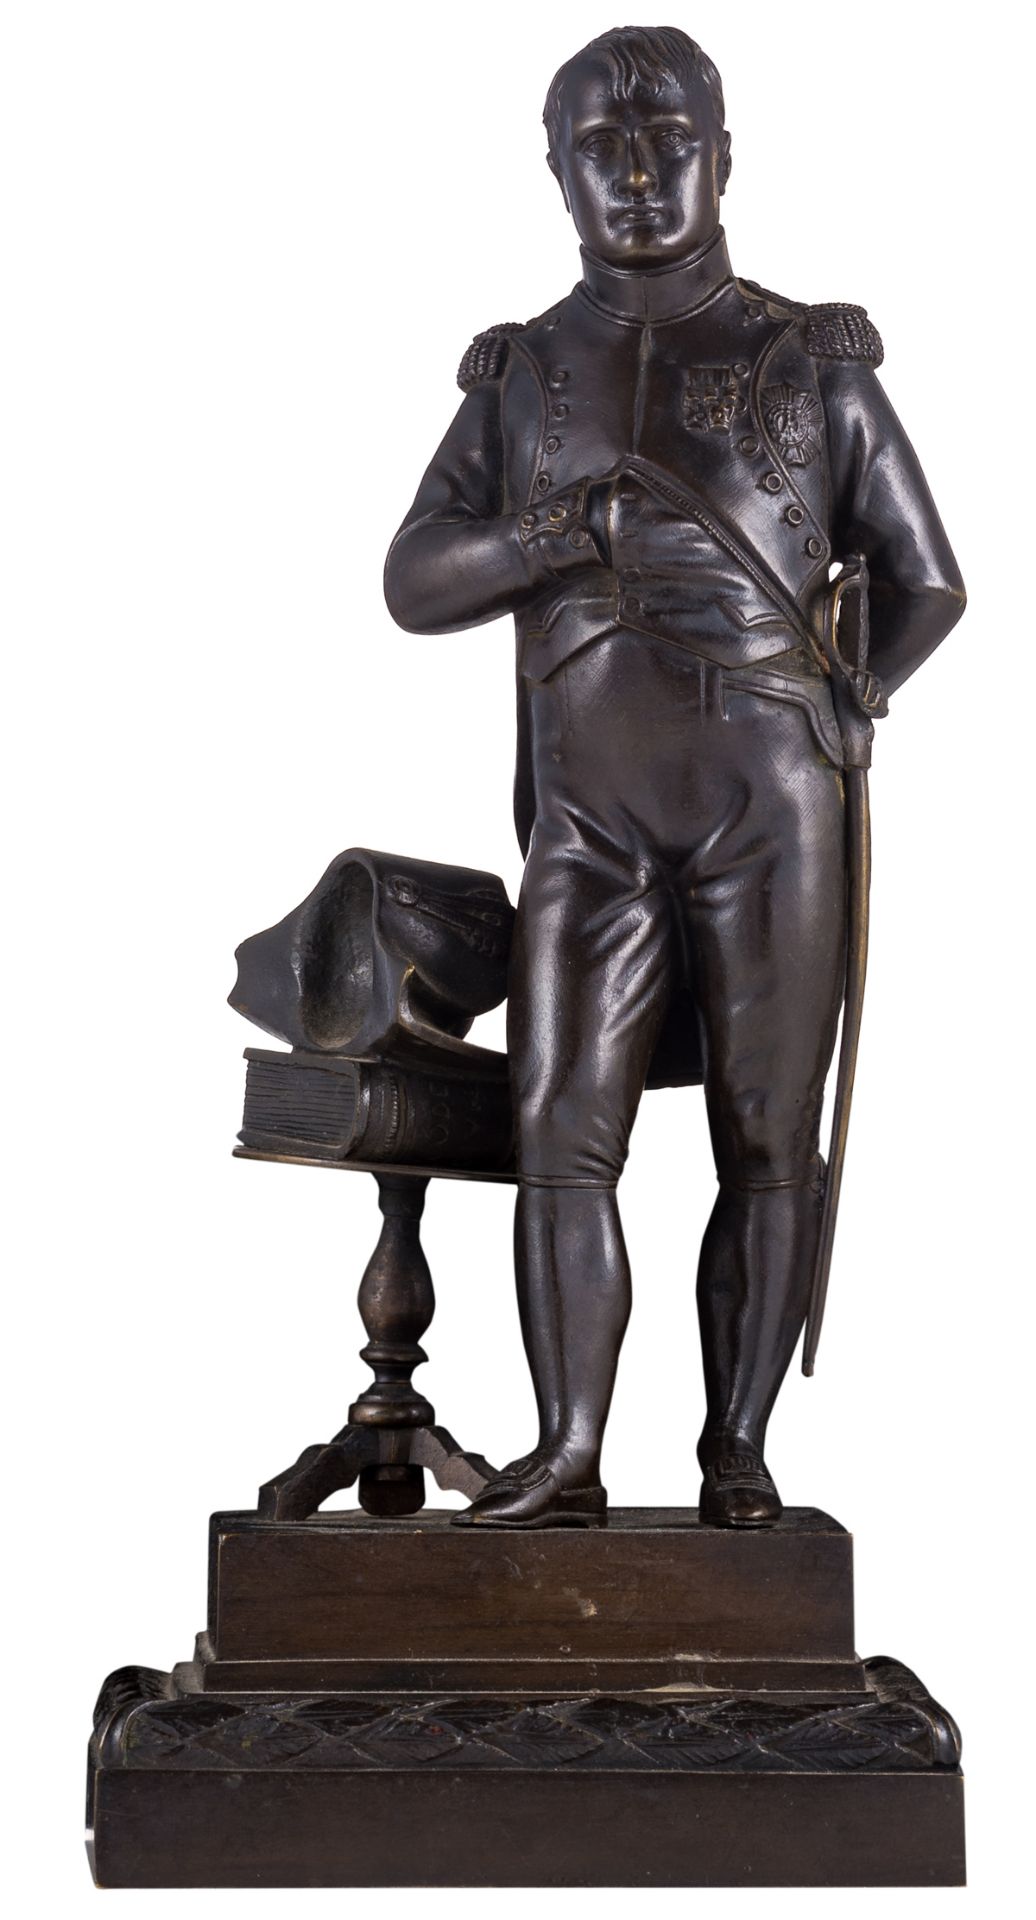 No visible signature, Napoleon, patinated bronze, H 30 cm